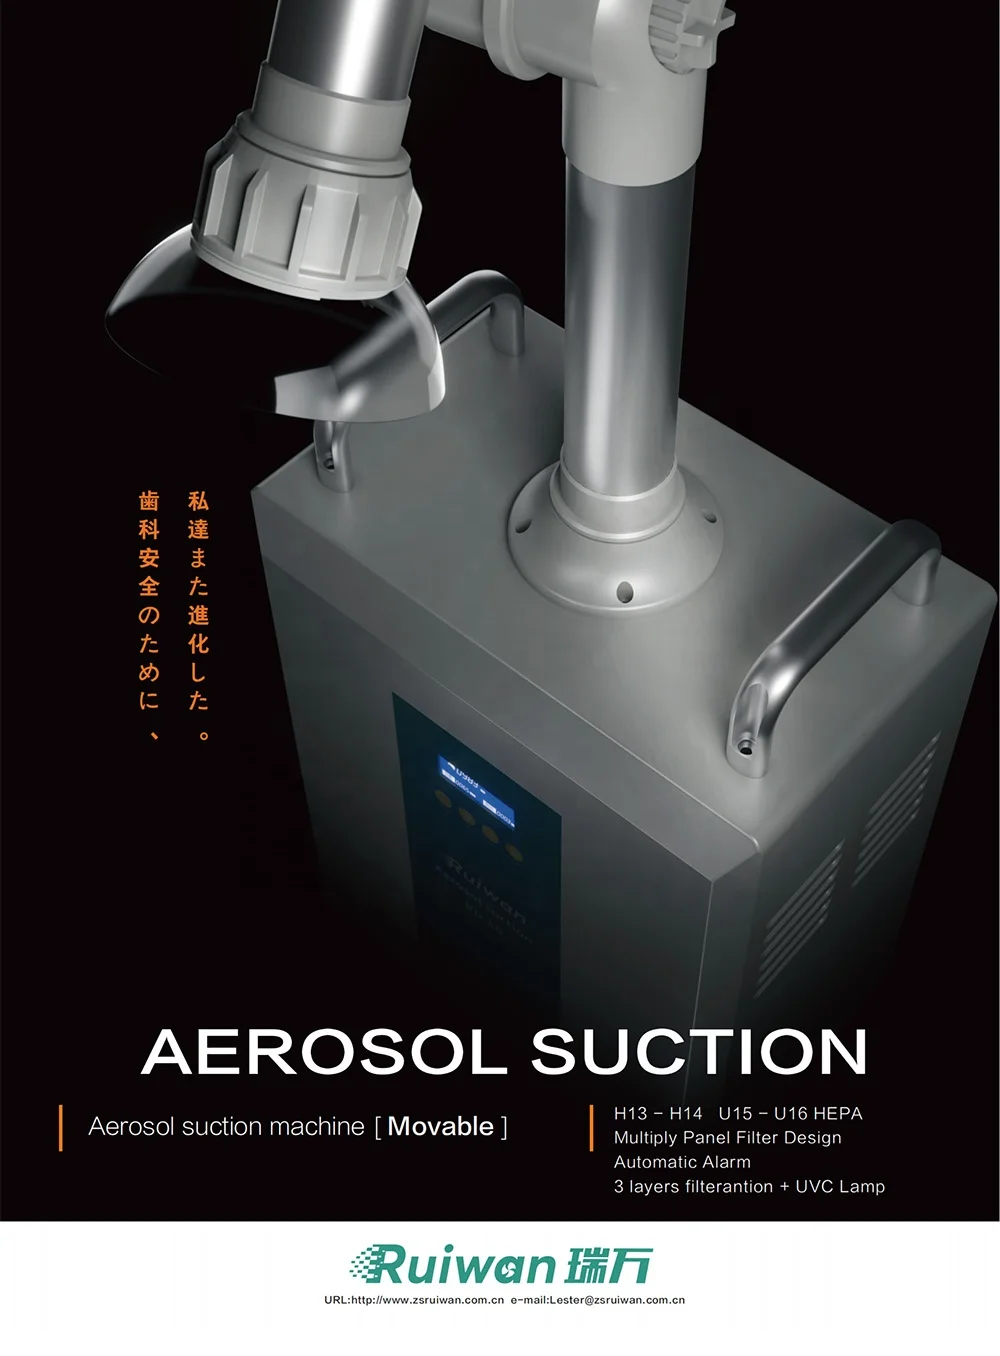 
external oral suction hospital aerosol suction machine 